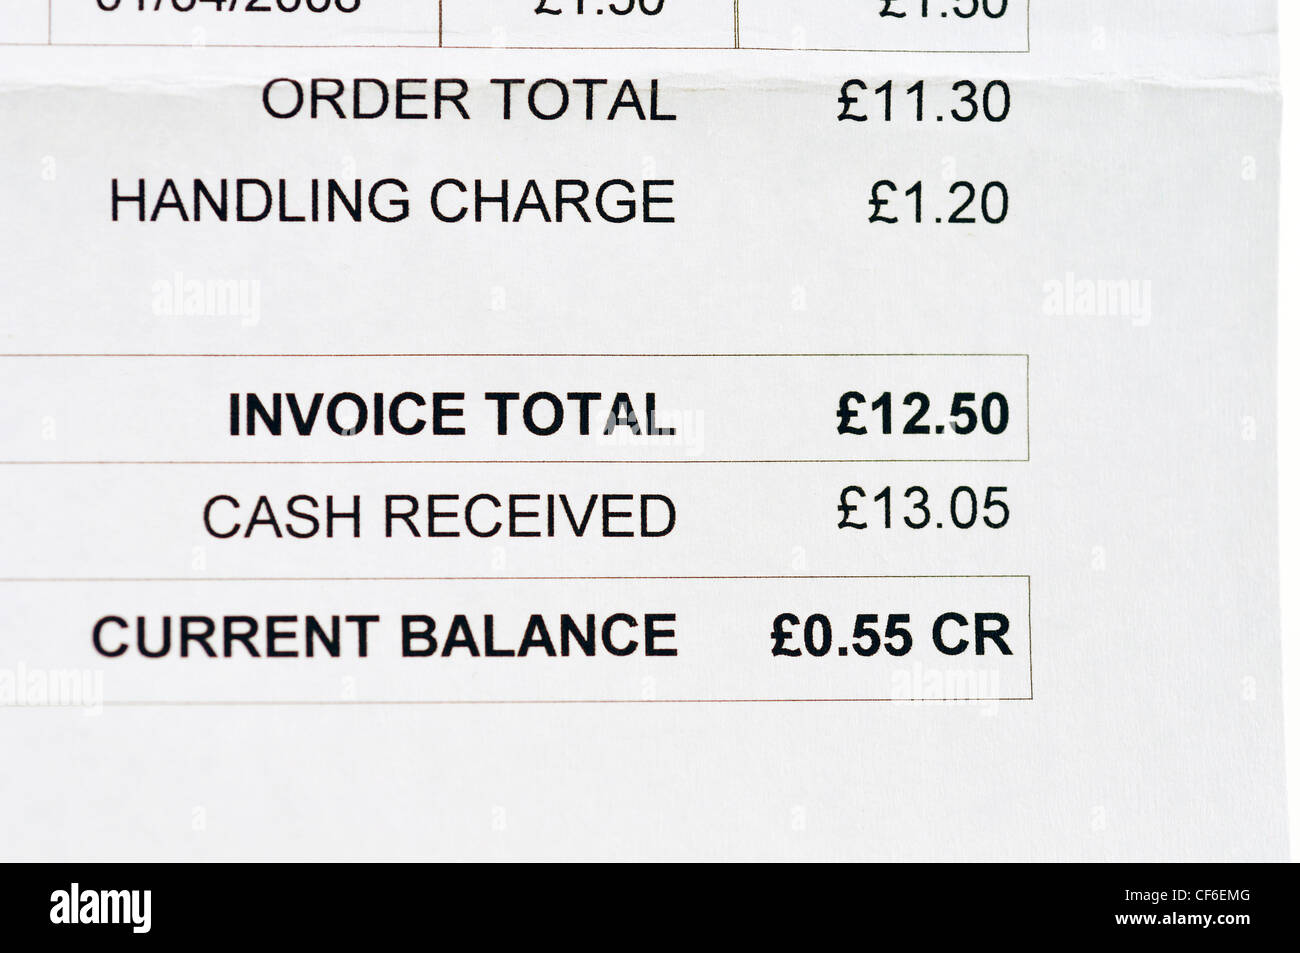 Invoice in British pounds Stock Photo